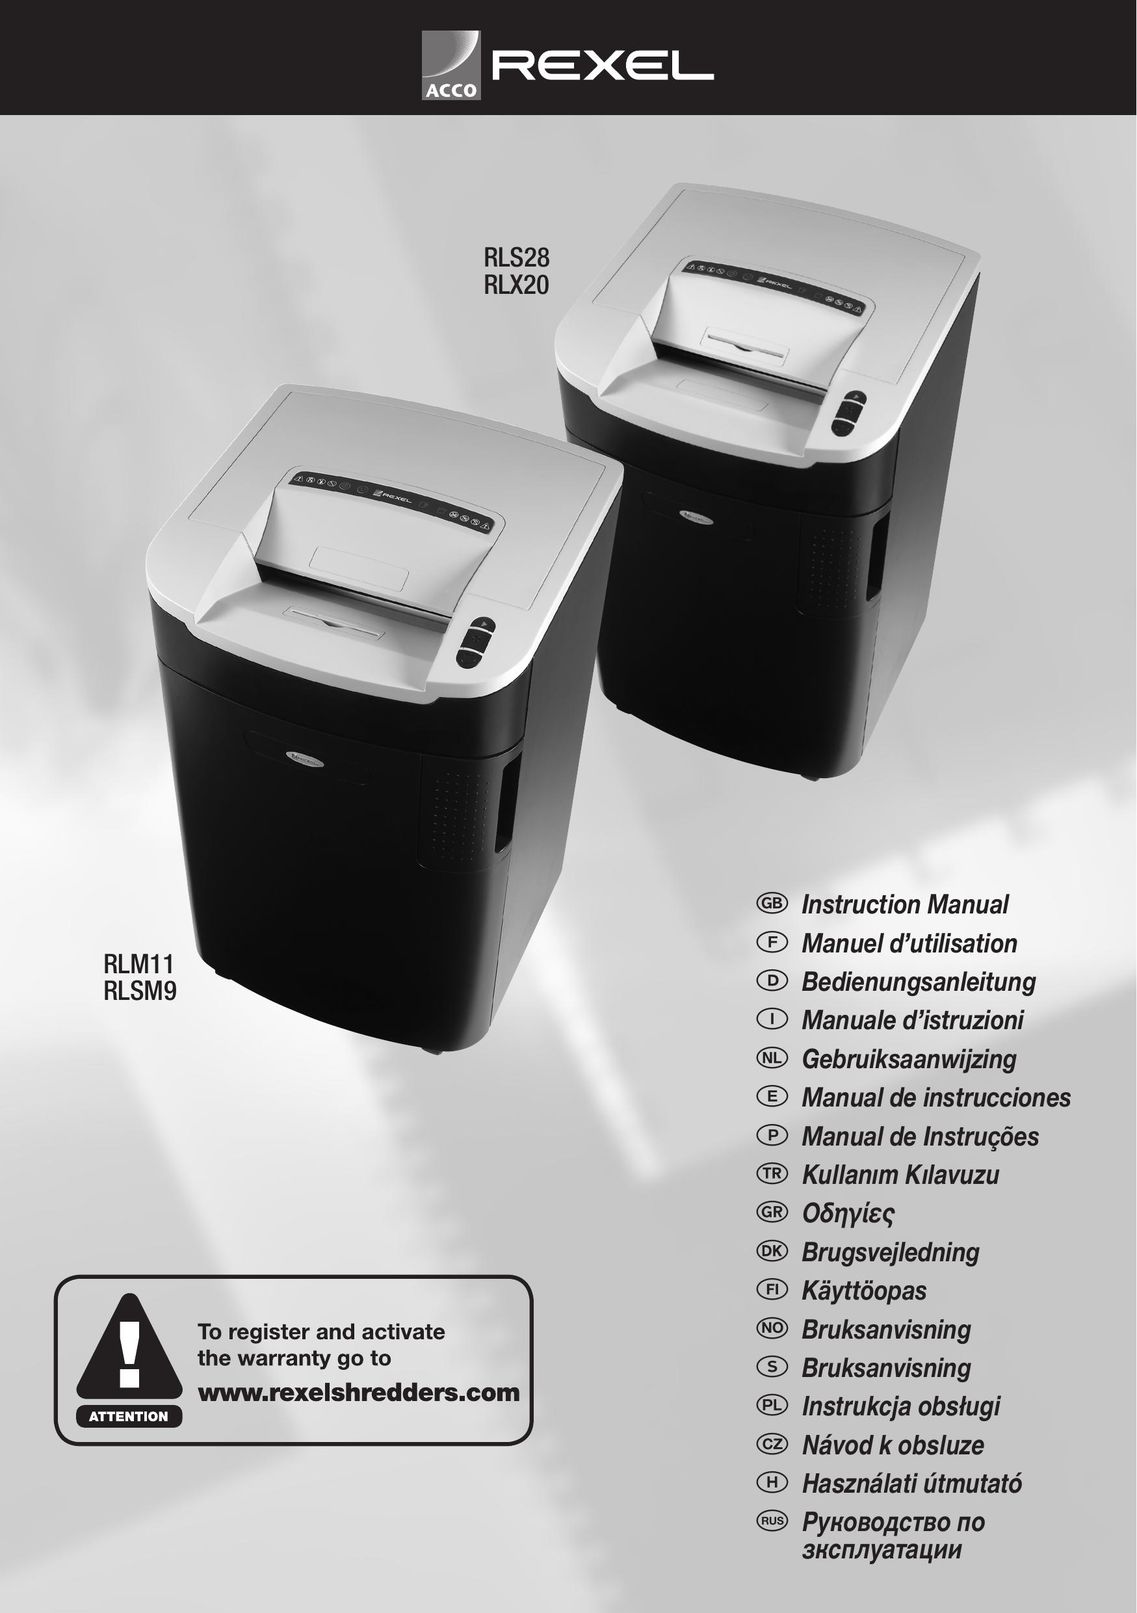 ACCO Brands RLX20 Paper Shredder User Manual